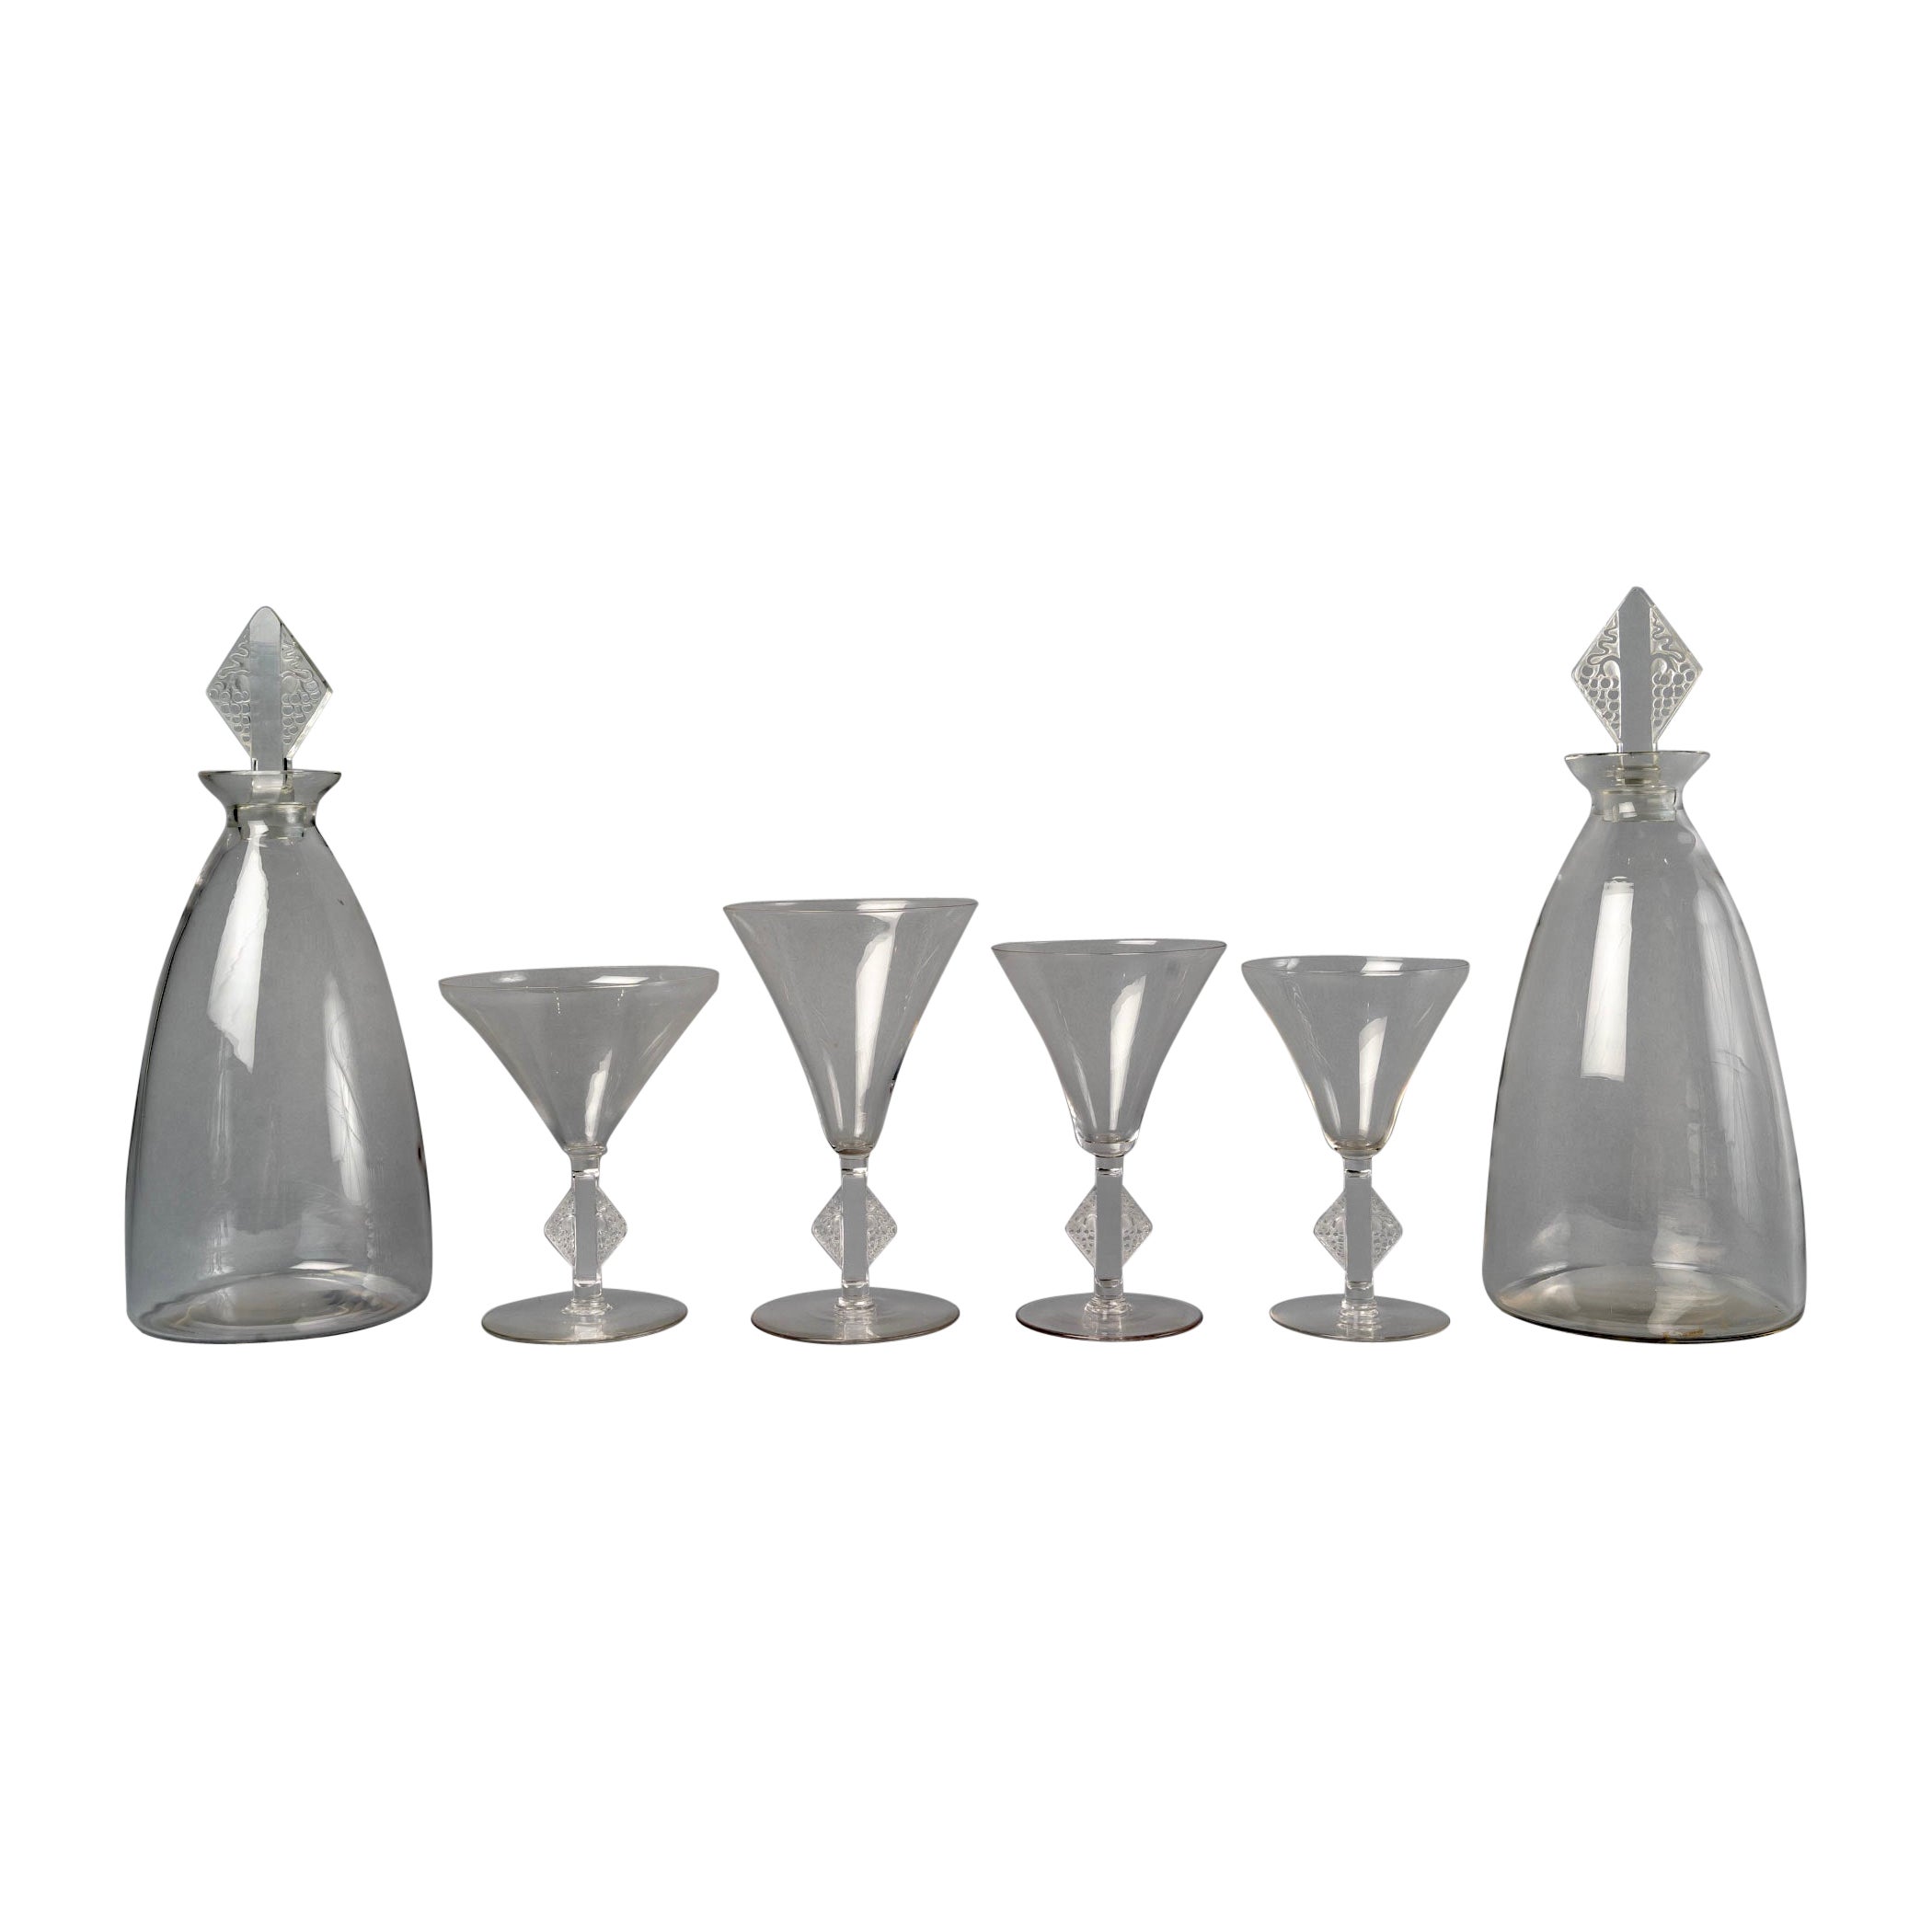 1924 René Lalique, Set of Tablewares Glasses Savergne Clear Glass, 34 Pieces For Sale